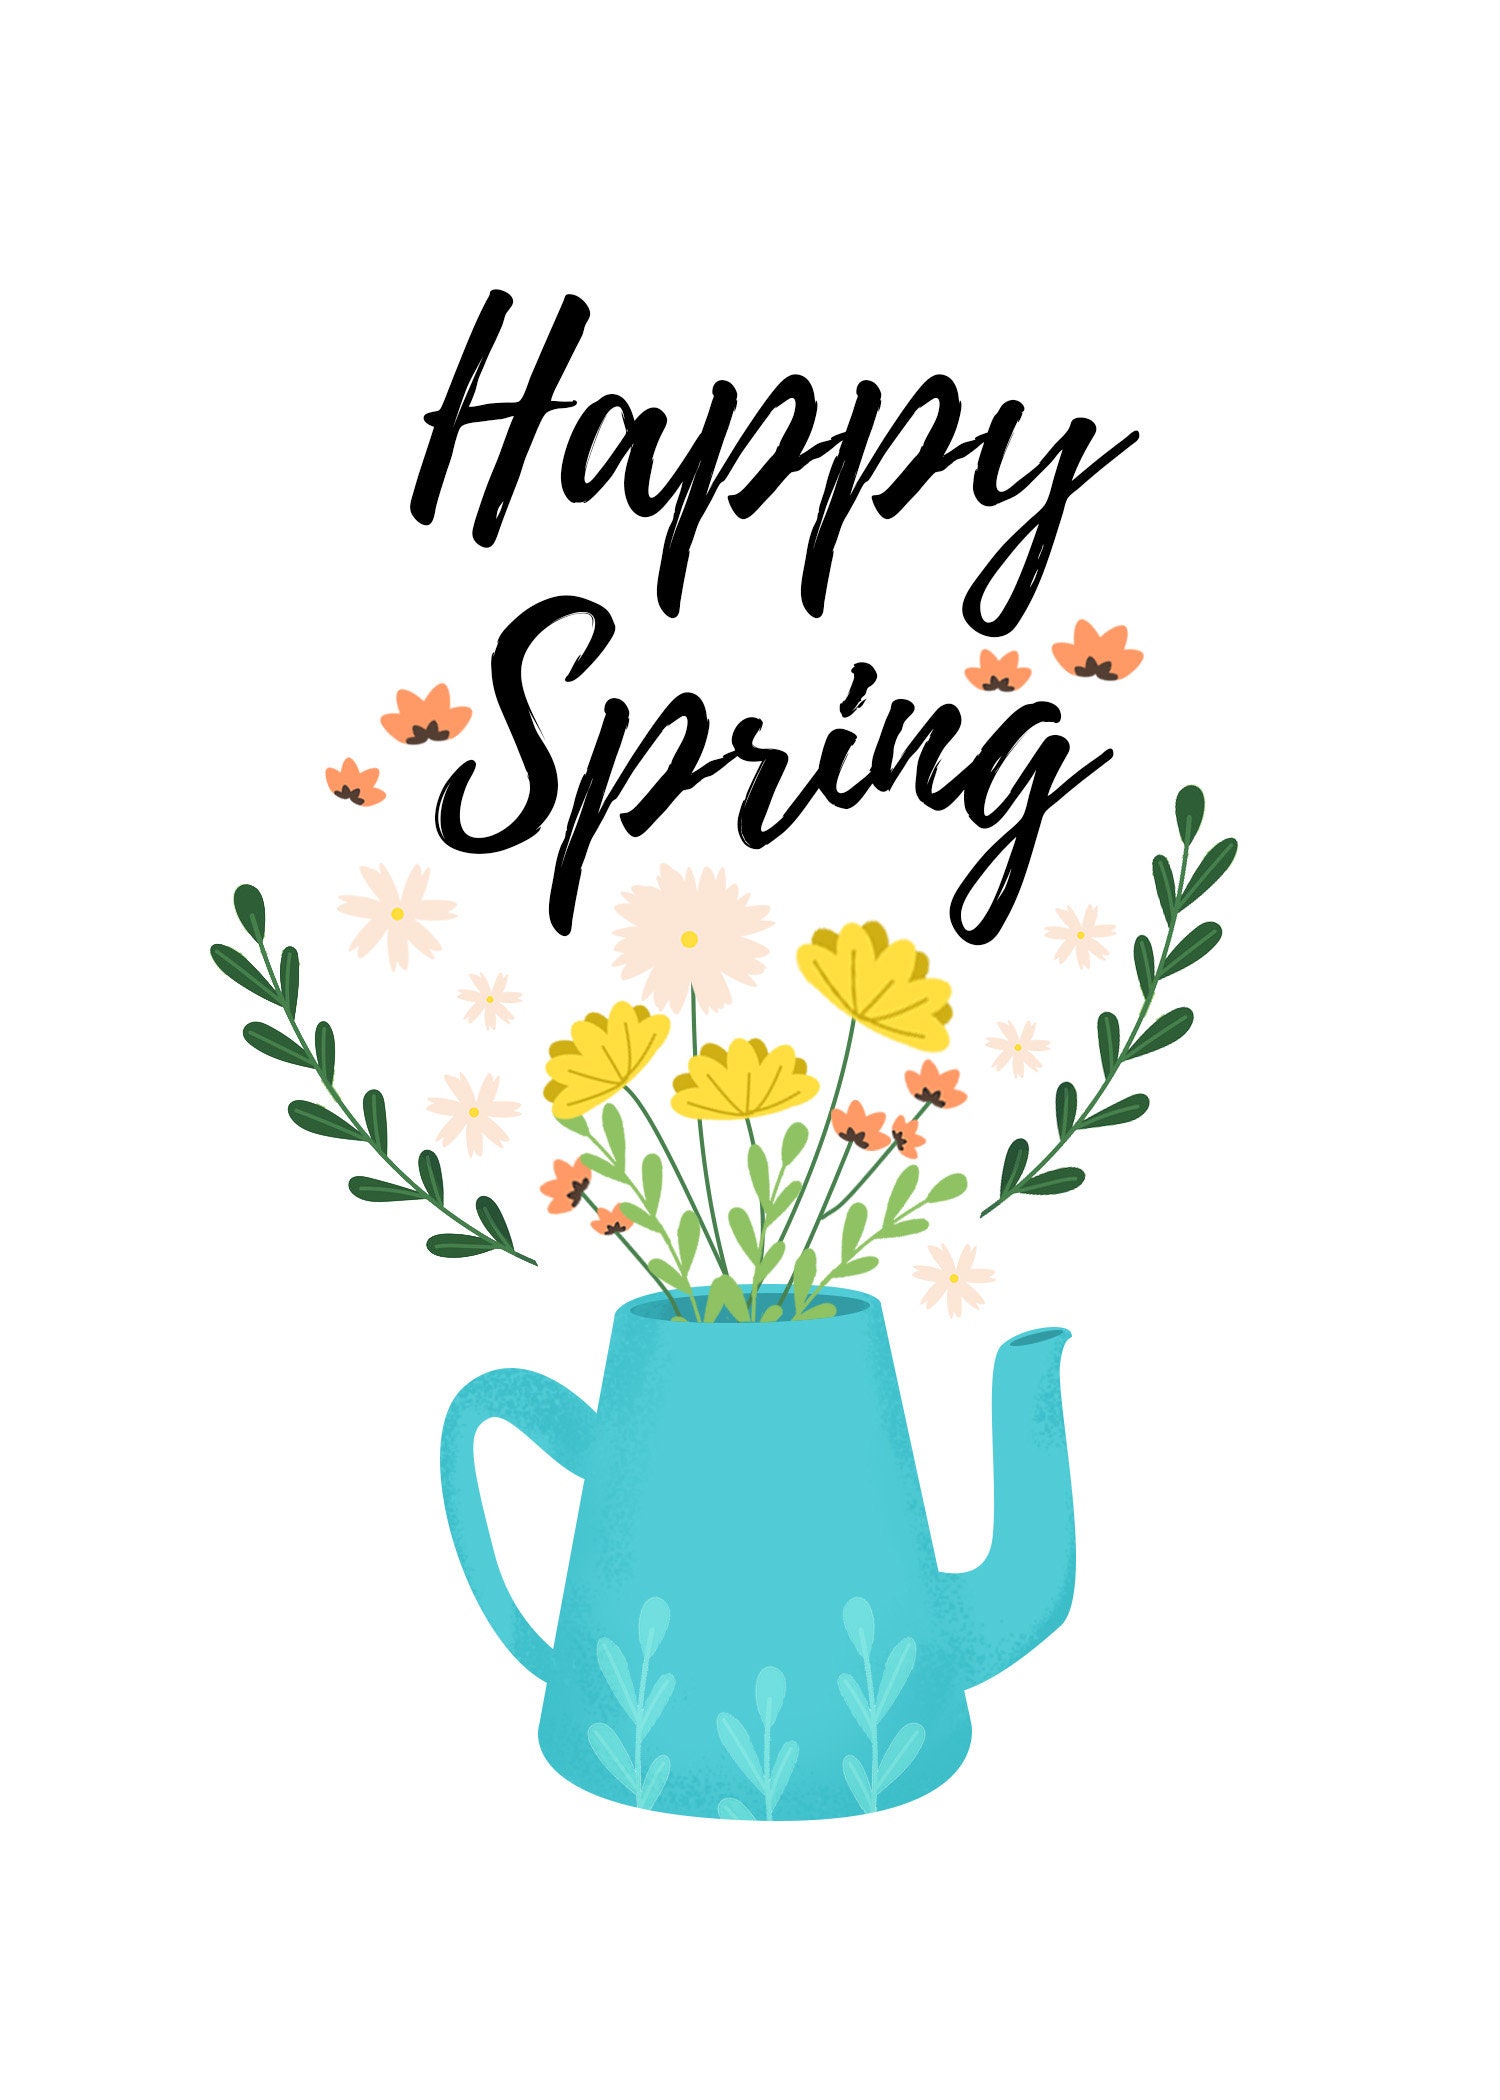 happy-spring-greeting-card-printable-happy-spring-greeting-etsy-uk